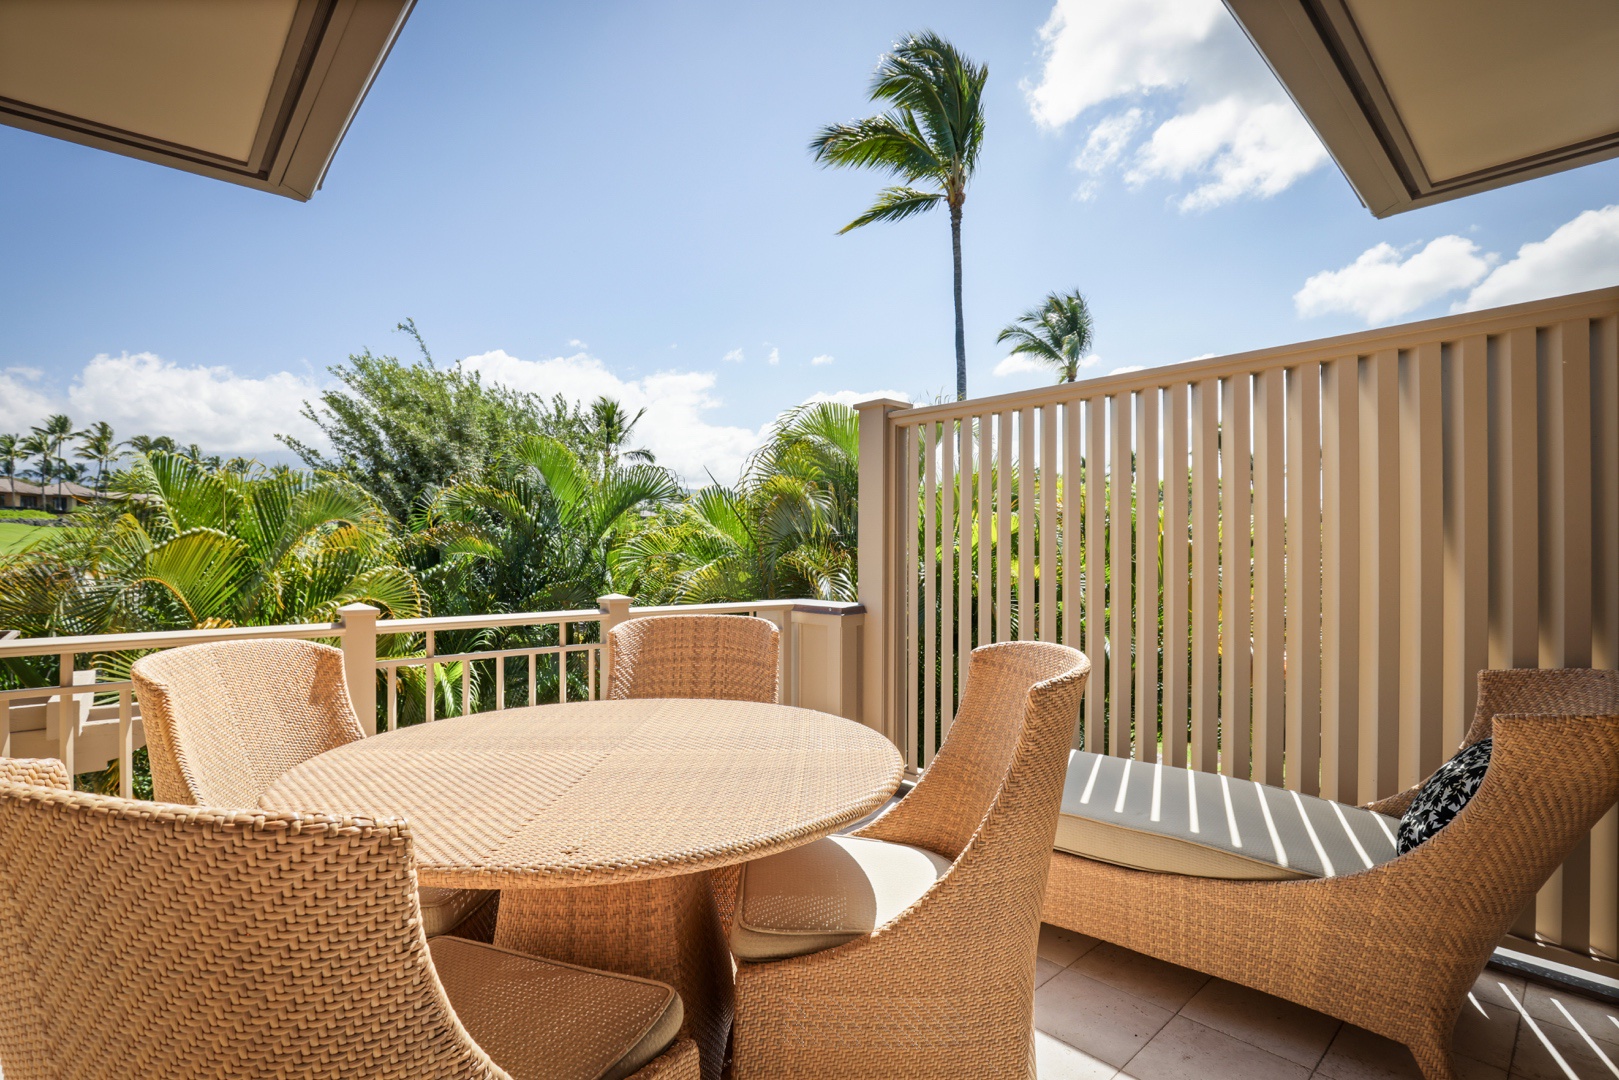 Kailua Kona Vacation Rentals, 3BD Ke Alaula Villa (210B) at Four Seasons Resort at Hualalai - Breakfast table and lounge chair on bonus balcony off the kitchen.